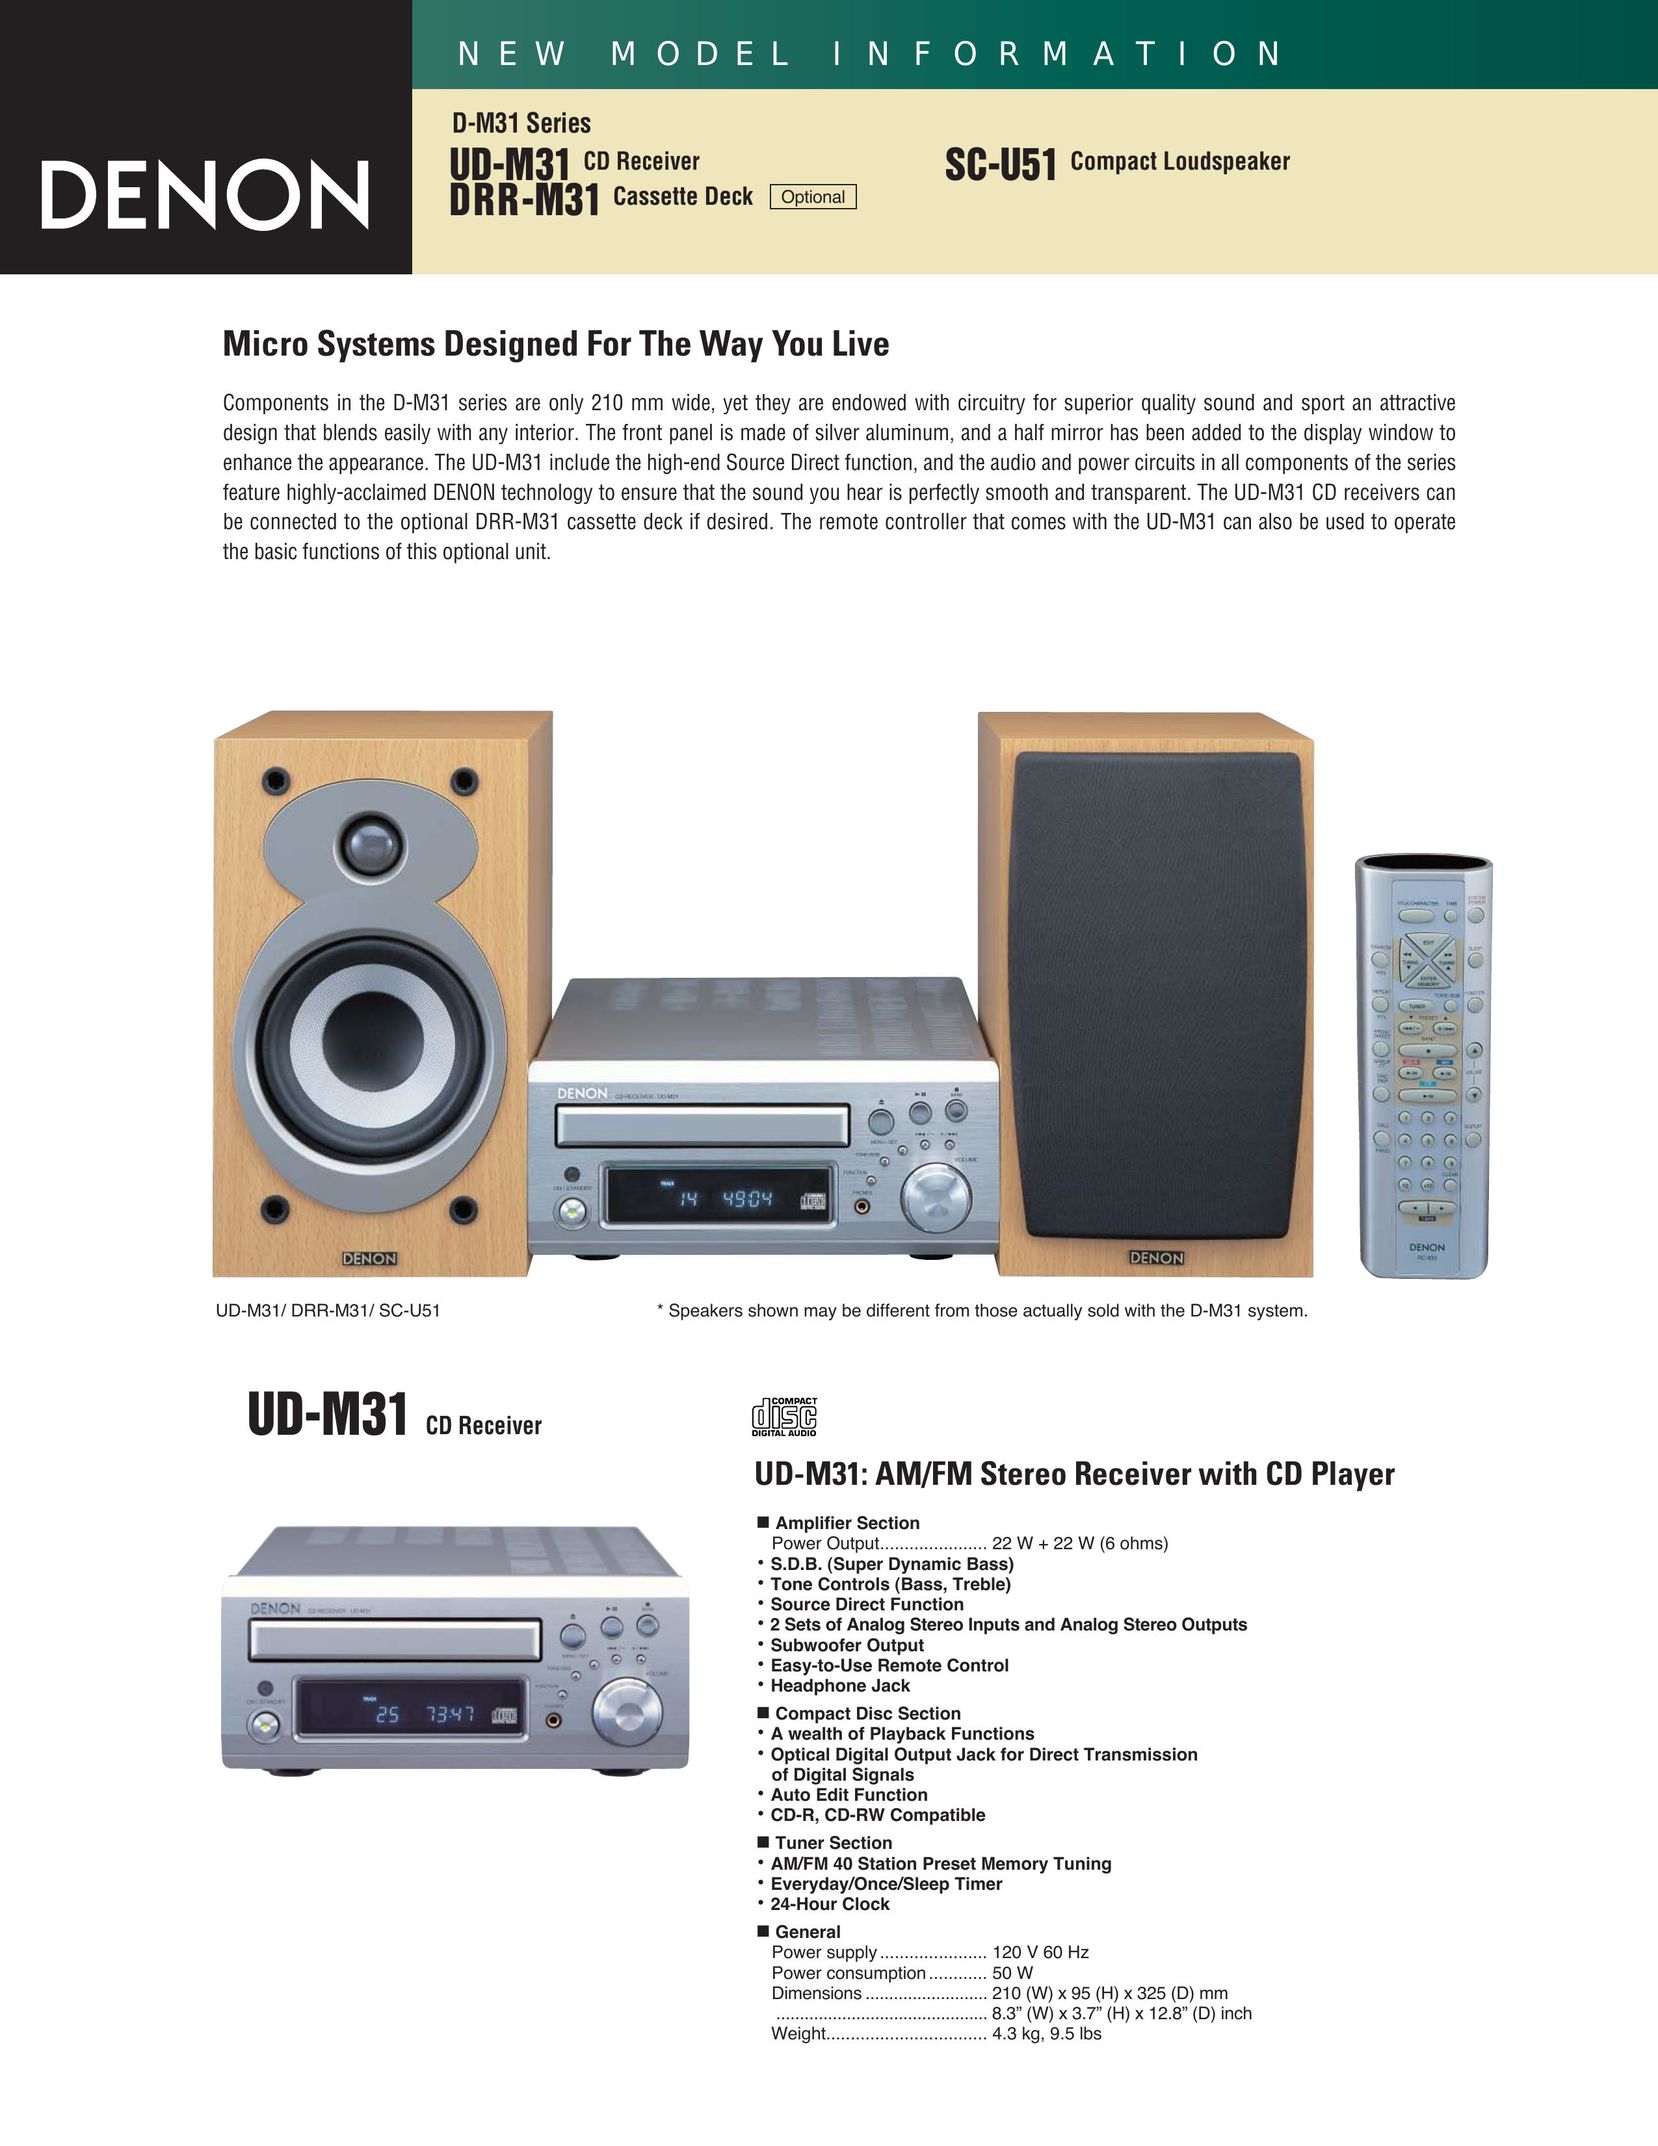 Denon UD-M31 CD Player User Manual